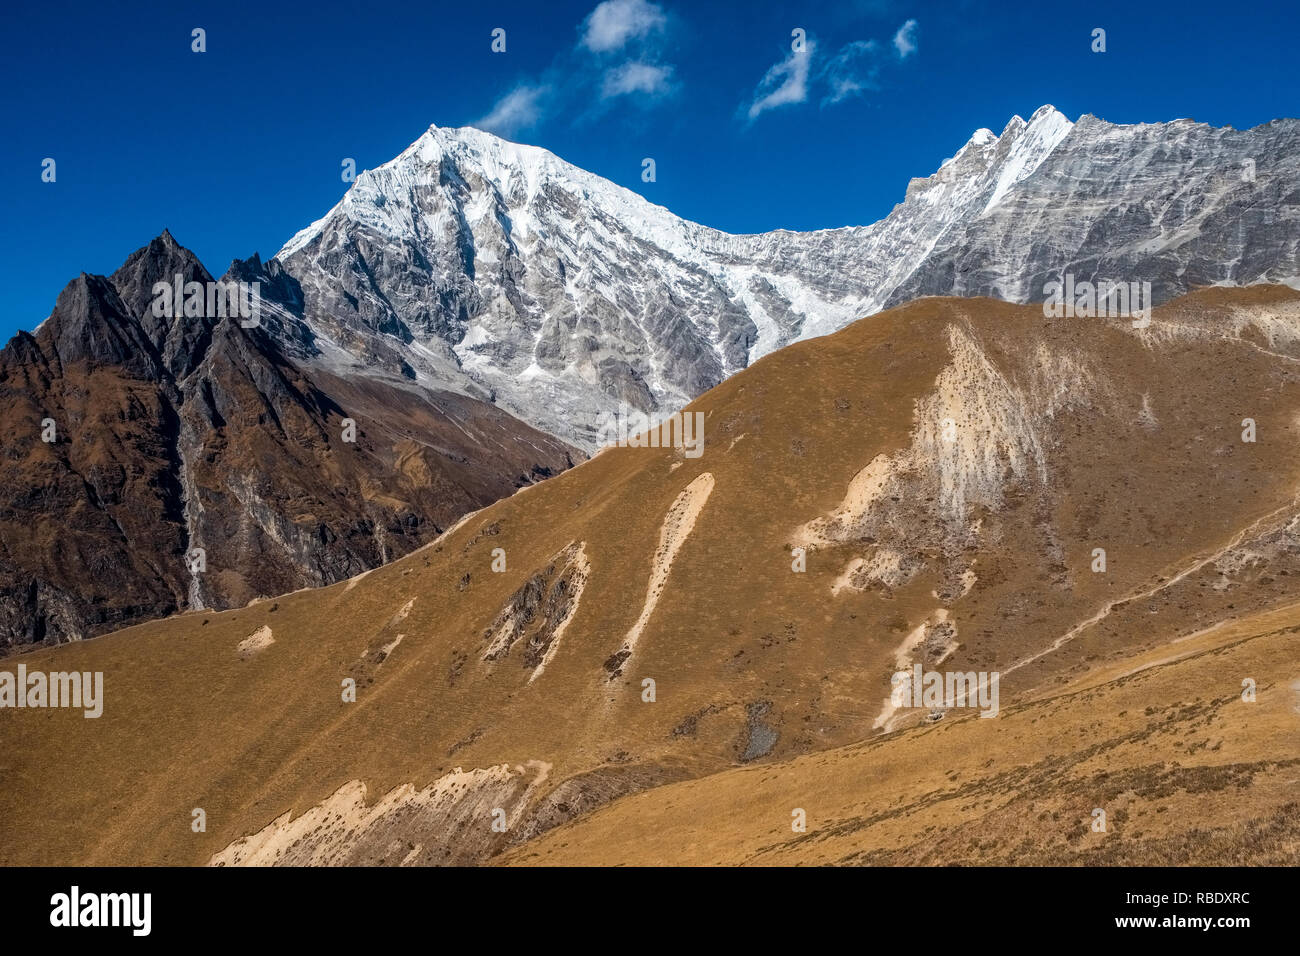 The Langtang Himalayas and the popular viewpoint of Kyanjin Ri, Nepal Stock Photo